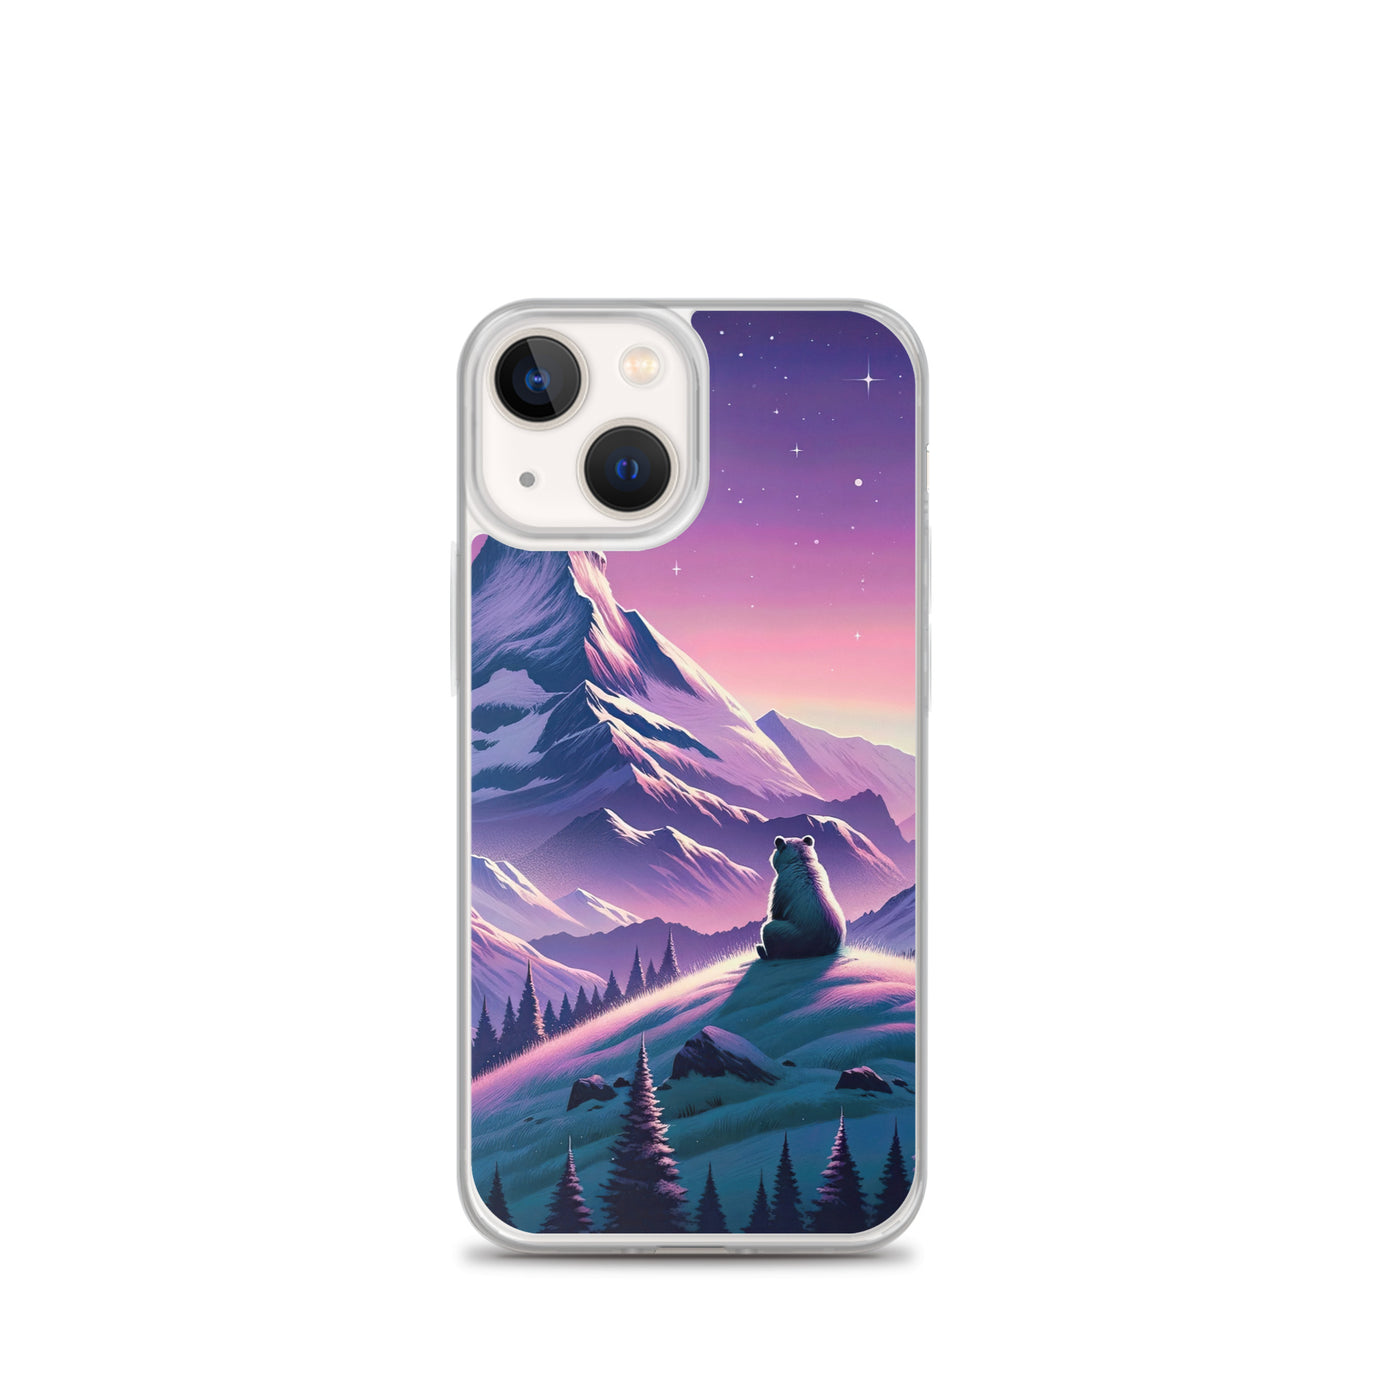 Bezaubernder Alpenabend mit Bär, lavendel-rosafarbener Himmel (AN) - iPhone Schutzhülle (durchsichtig) xxx yyy zzz iPhone 13 mini